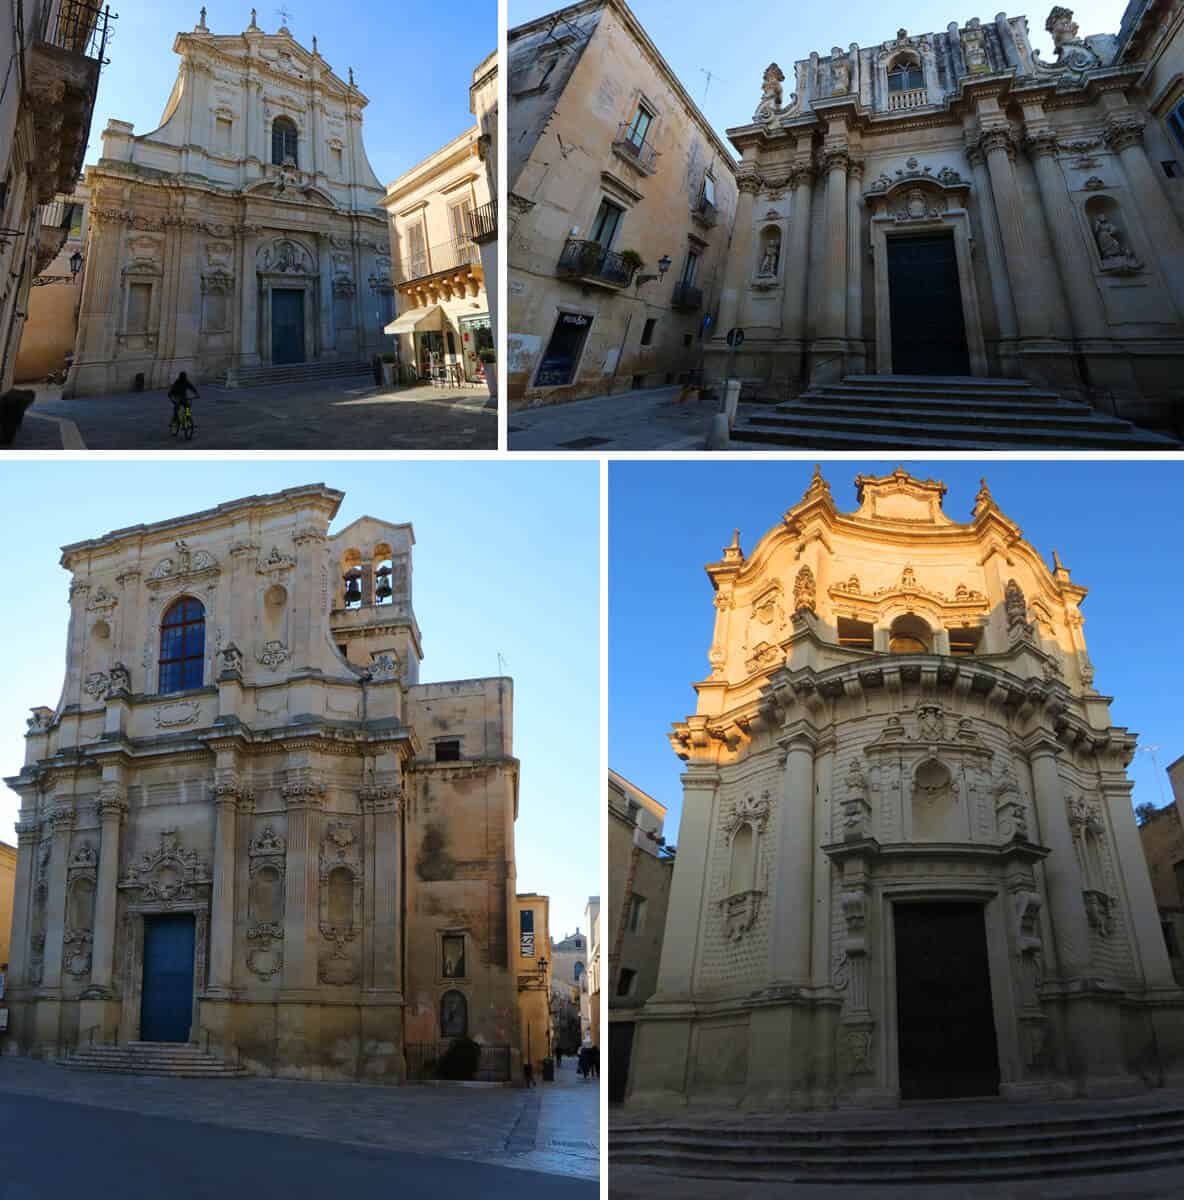 Churches in Lecce. Travel guide to the most beautiful city in Italy’s Puglia region: Lecce